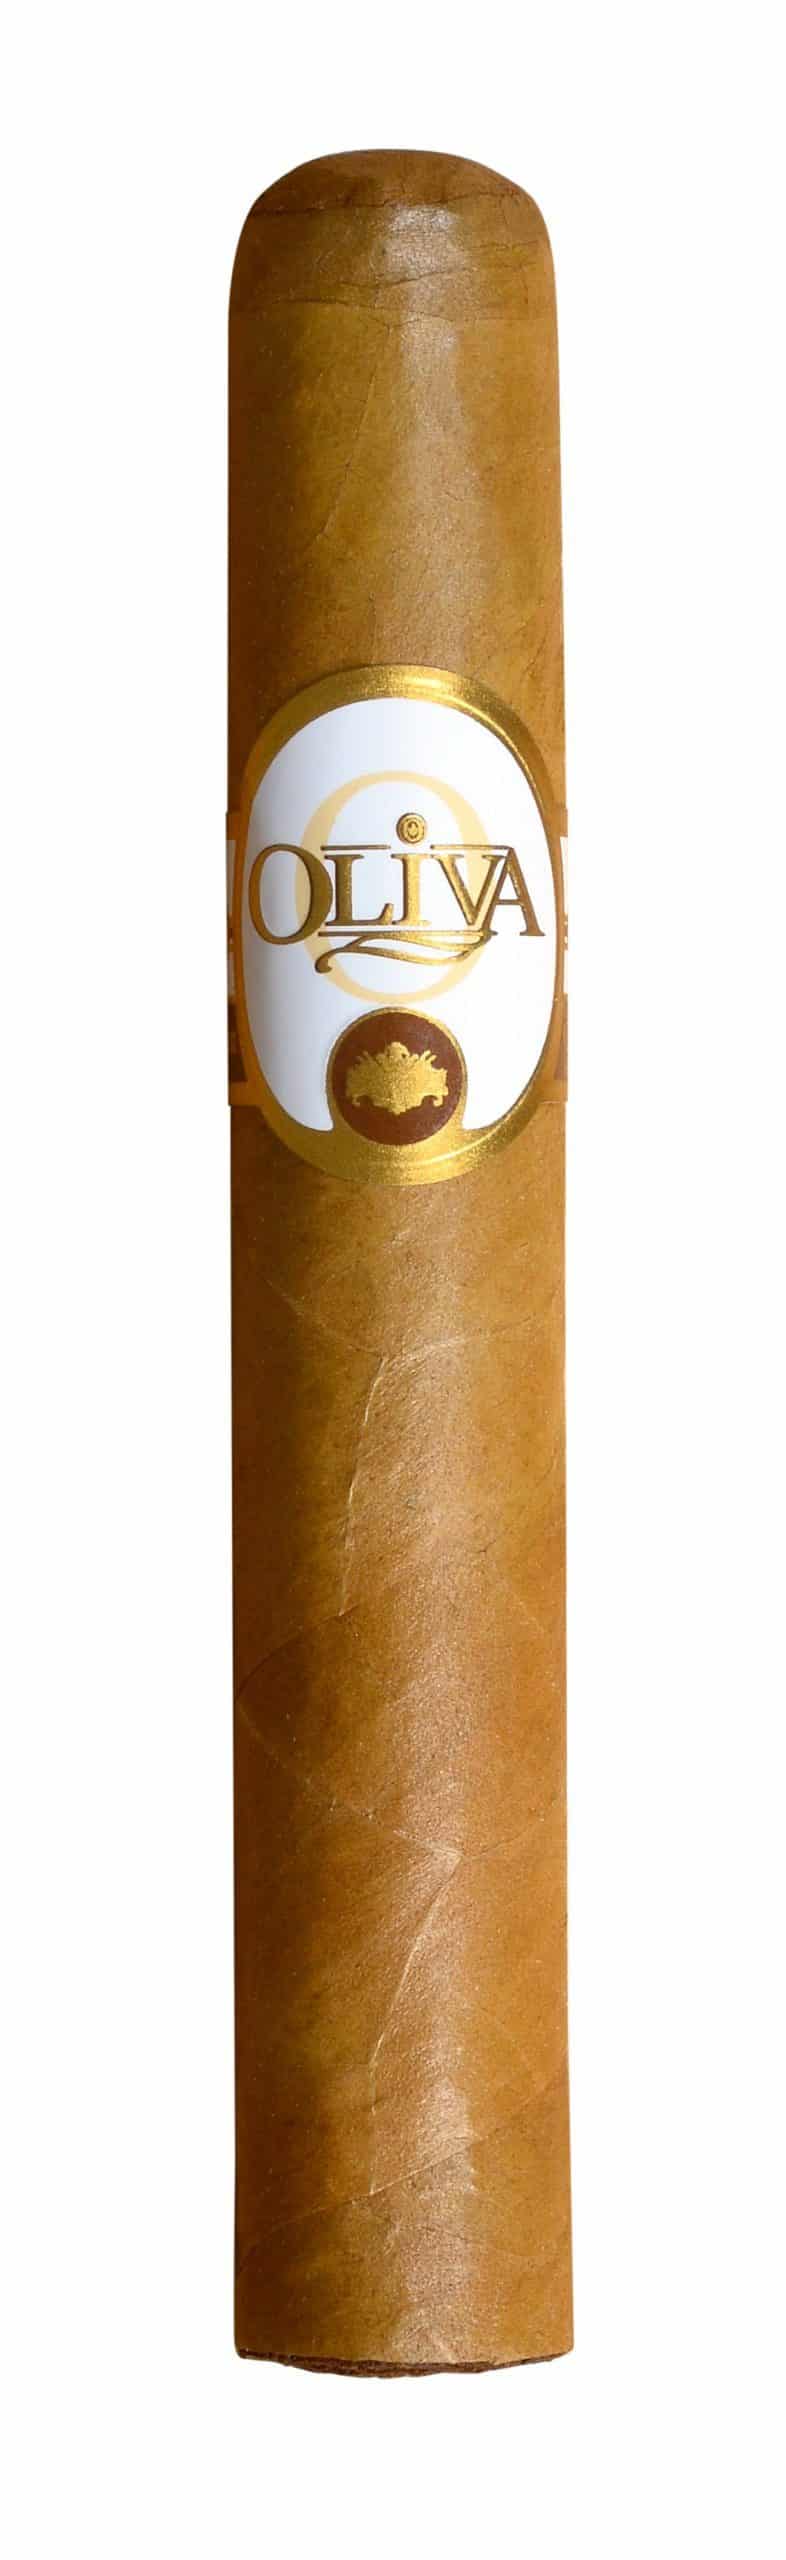 oliva connecticut reserve robusto single cigar